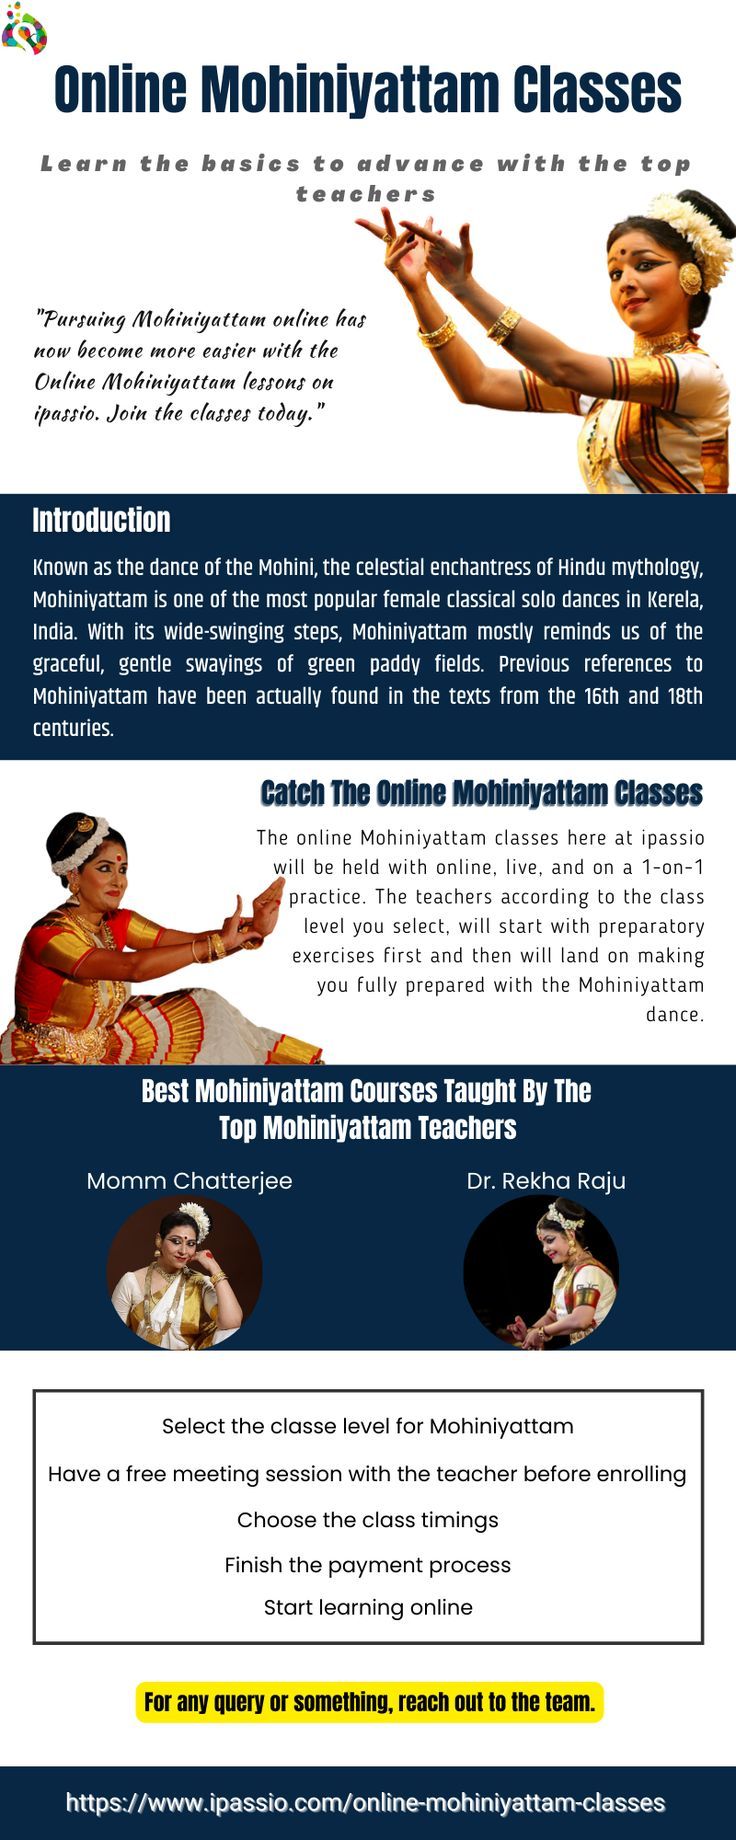 Online Mohiniyattam Classes: Learn The Basics To Advance